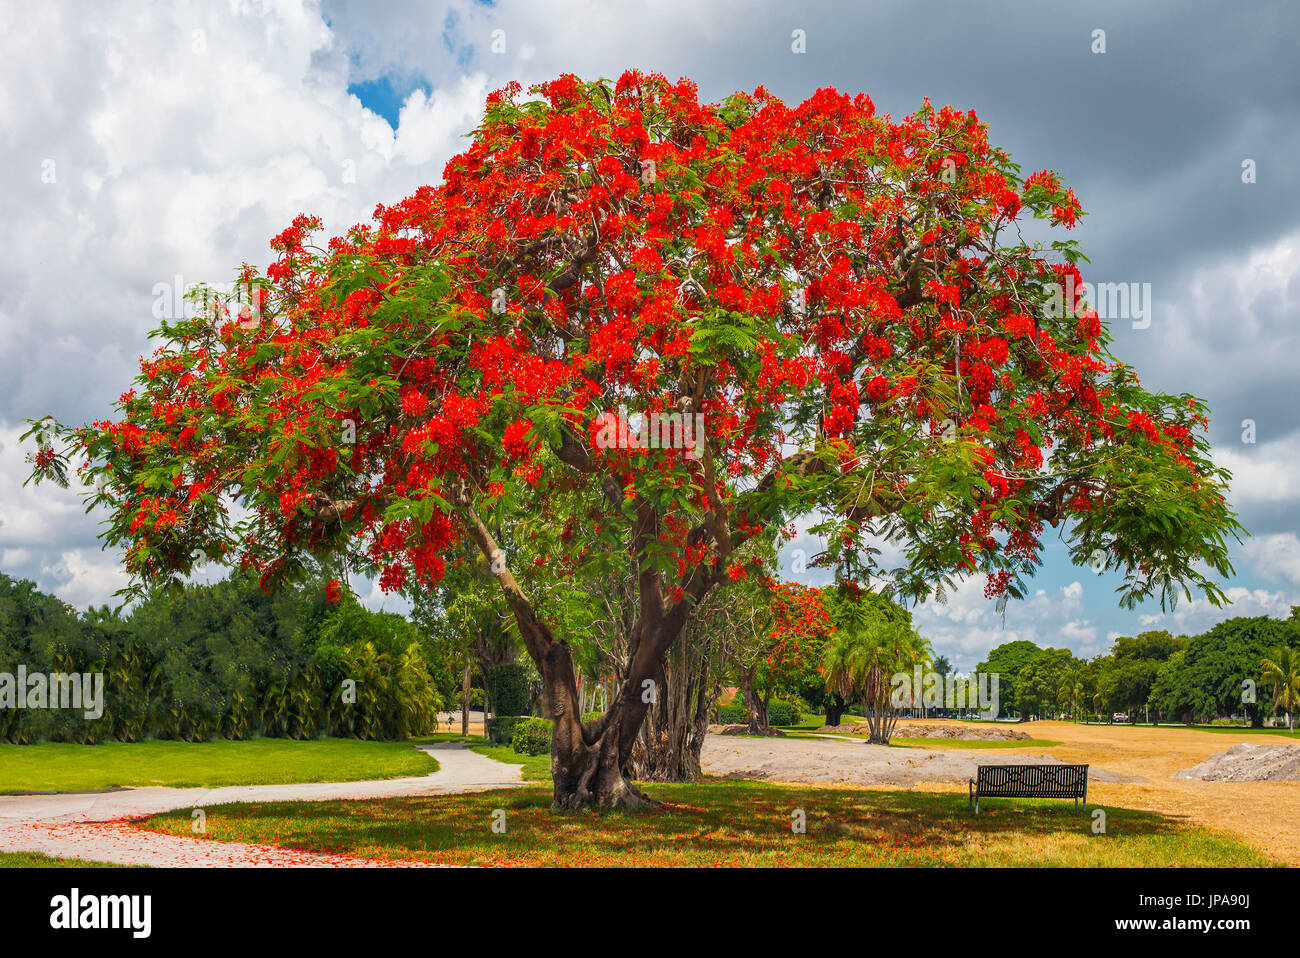 Flame tree, Flamboyan, ornamental tree, Delonix regia Stock Photo